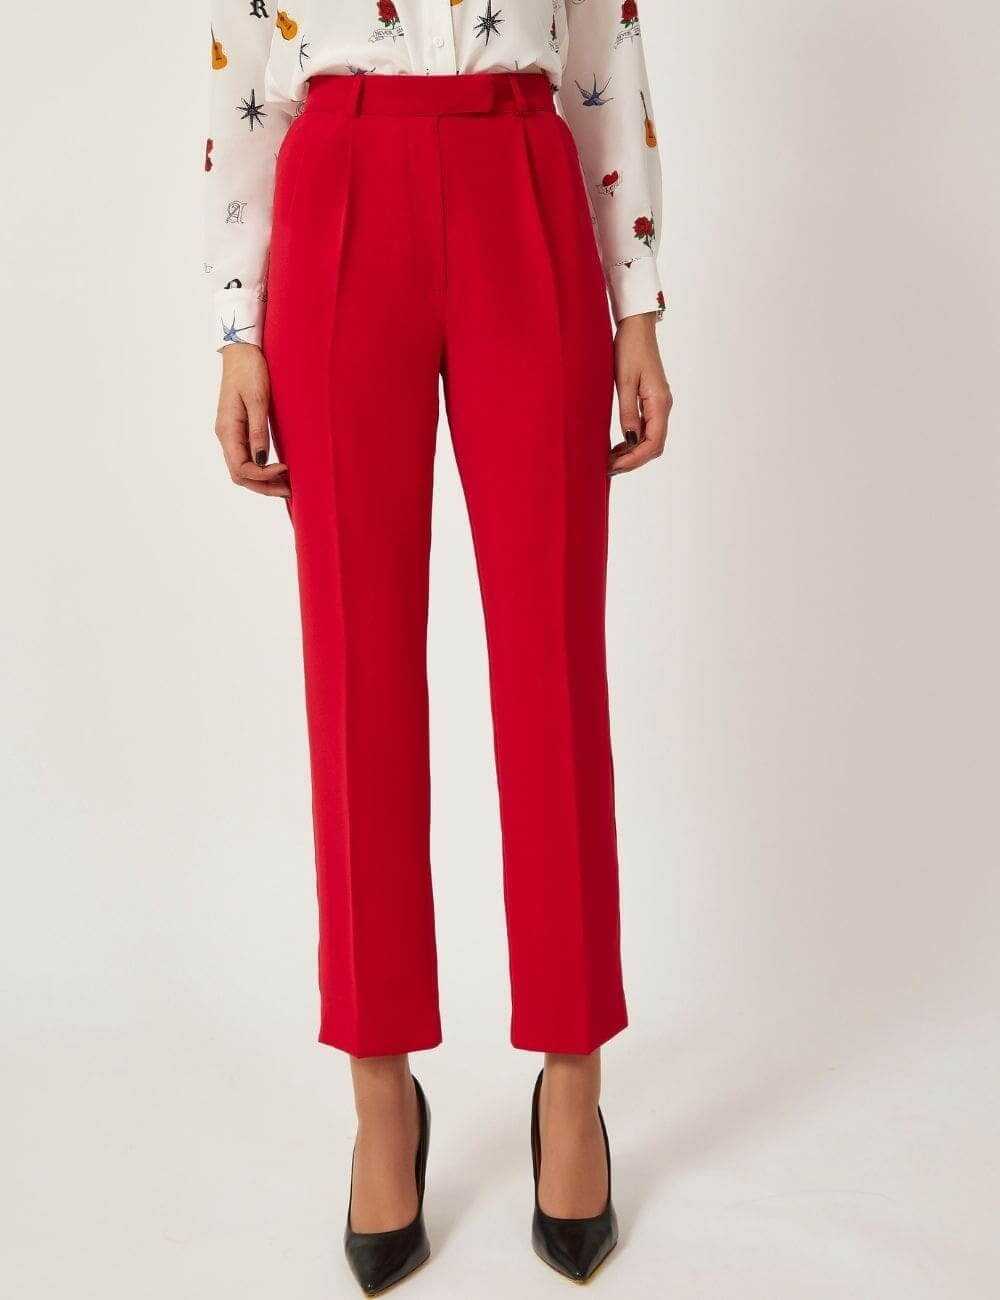 Pantalon droit rouge avec plis